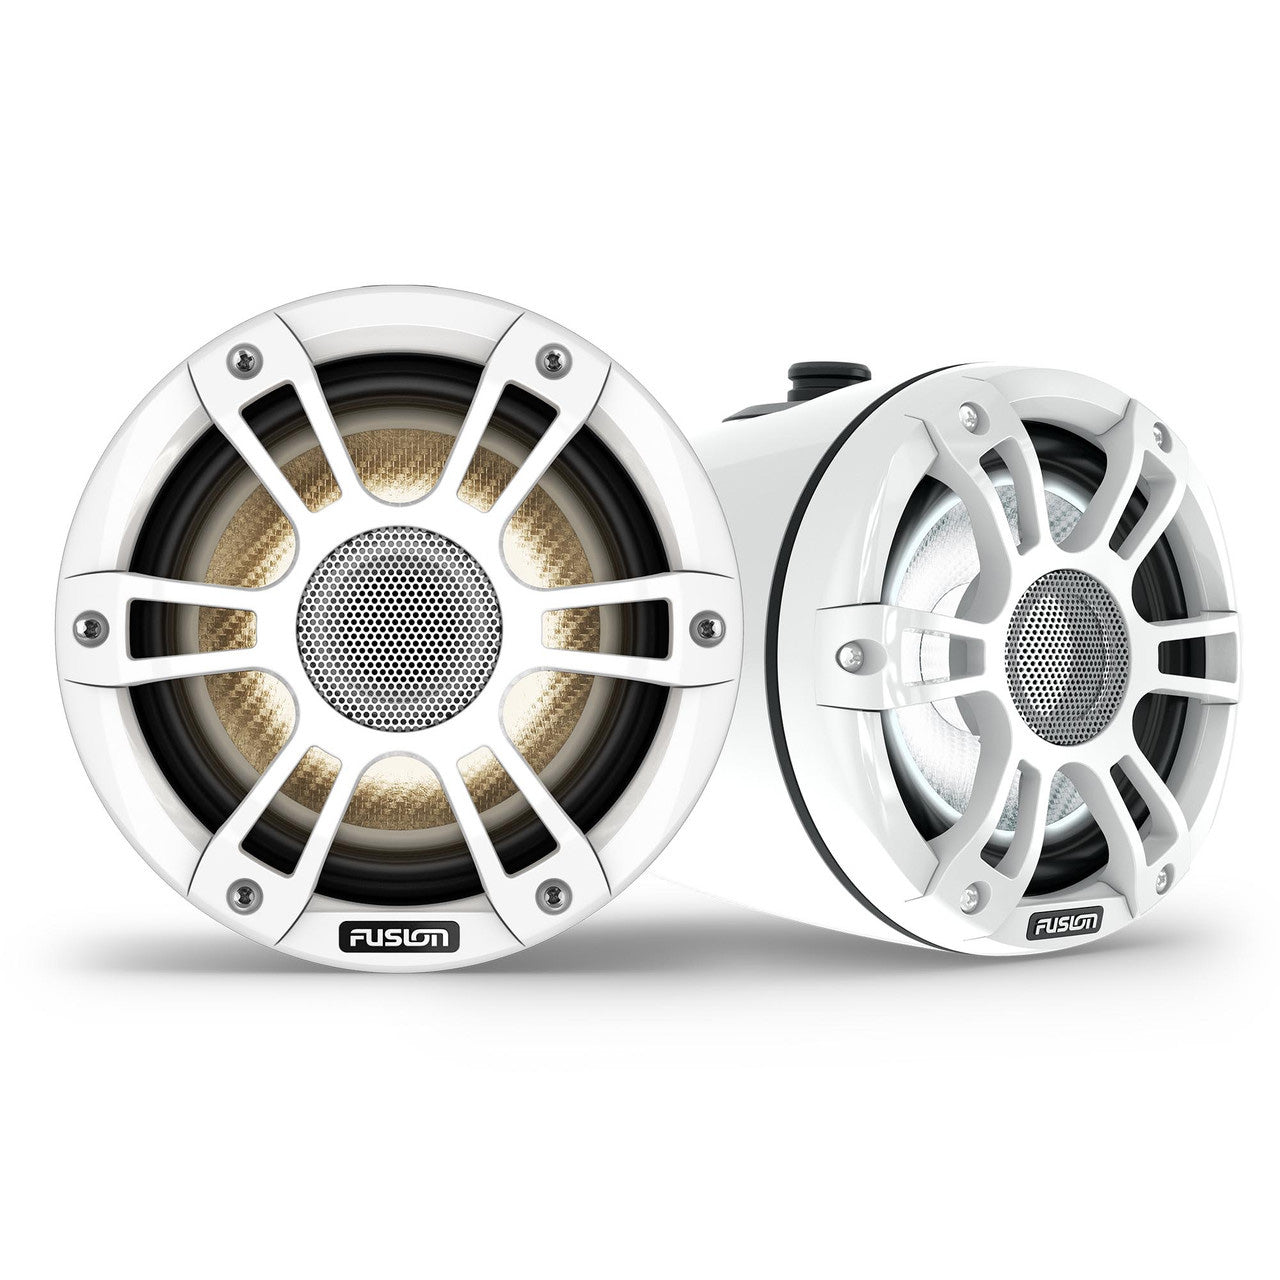 Fusion 6.5" Series 3I Wake Tower Crgbw Speakers White Sg-Flt653Spw